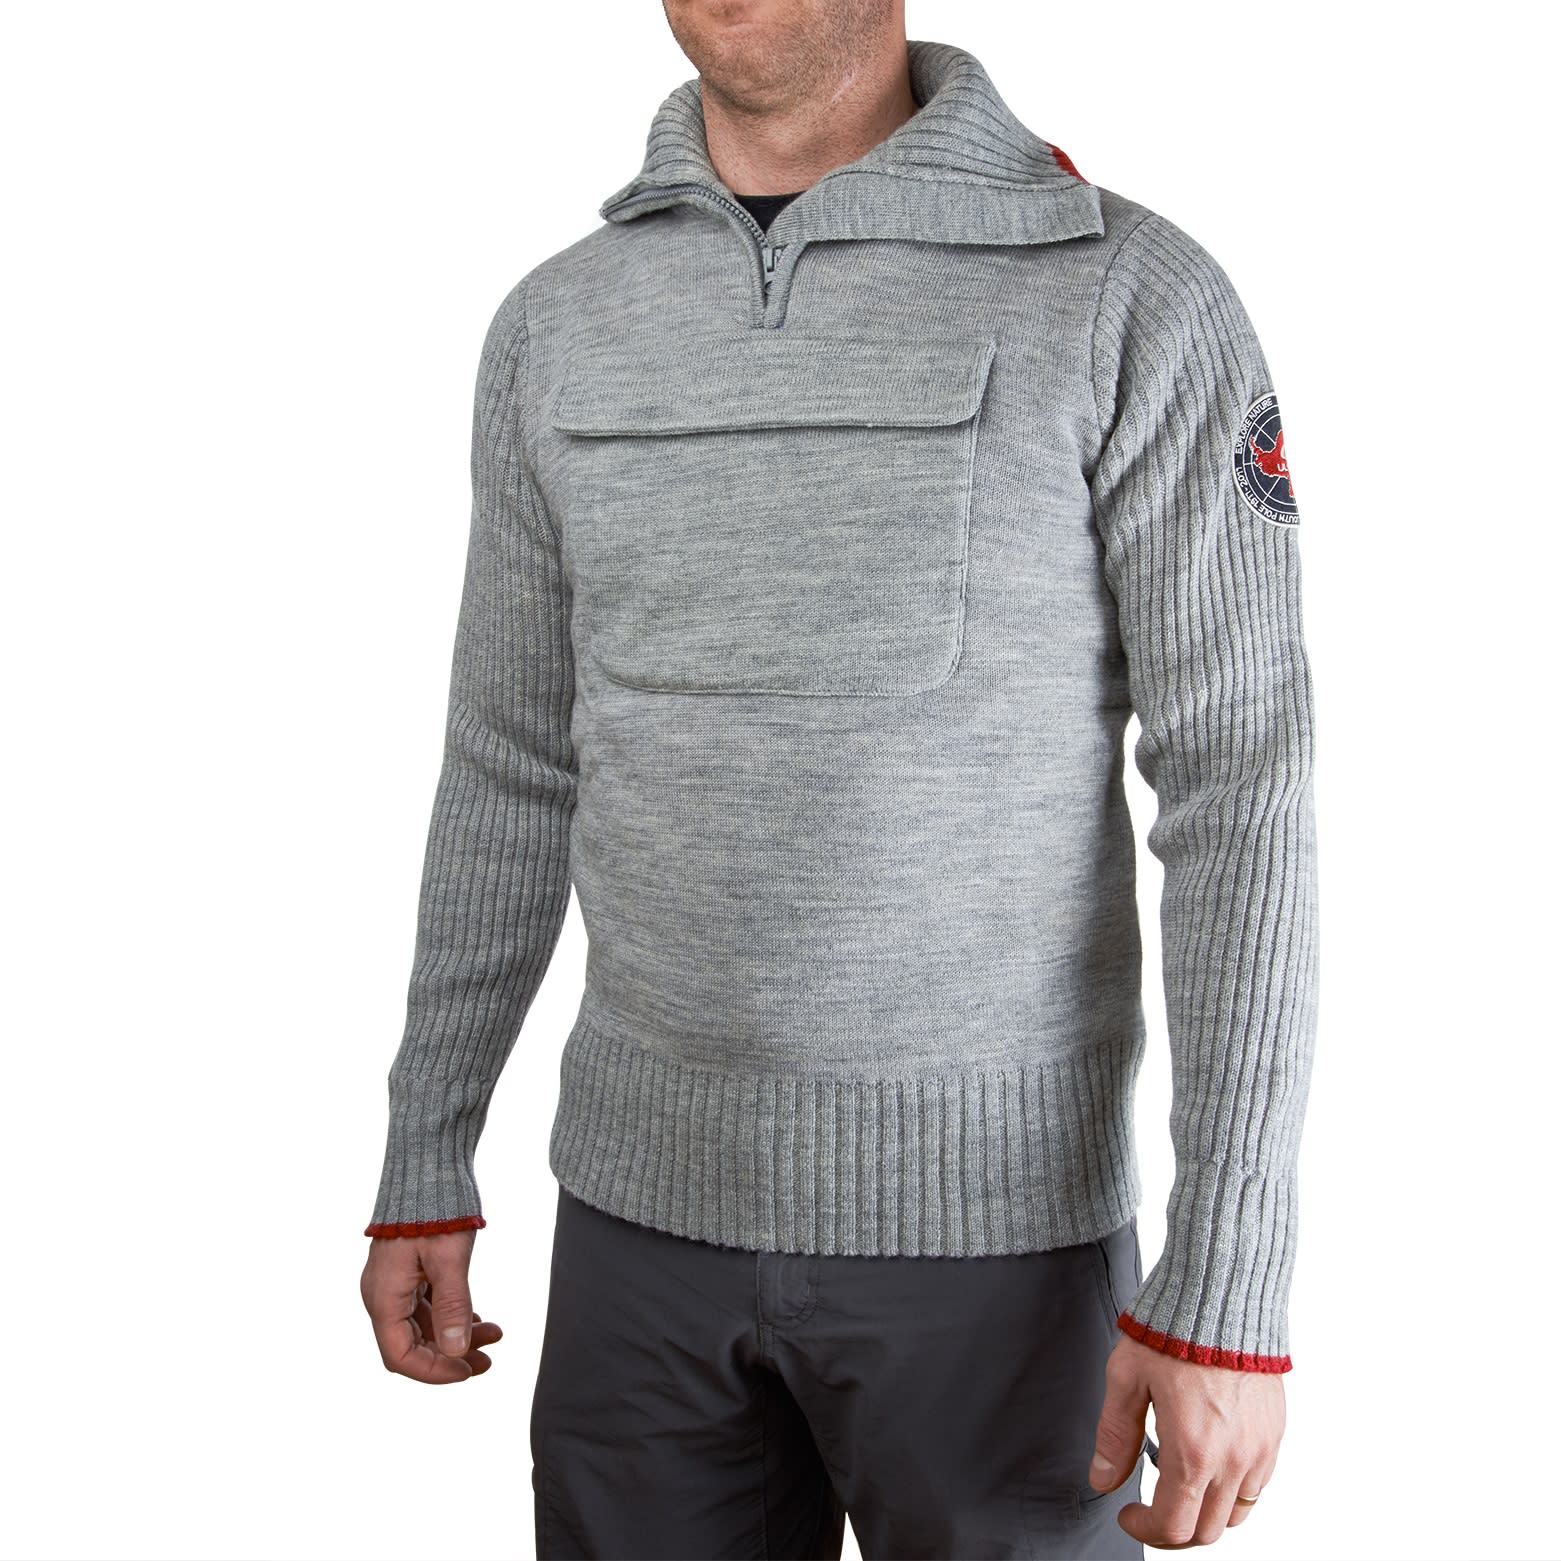 Køb Ulvang Opal sweater w/zip fra